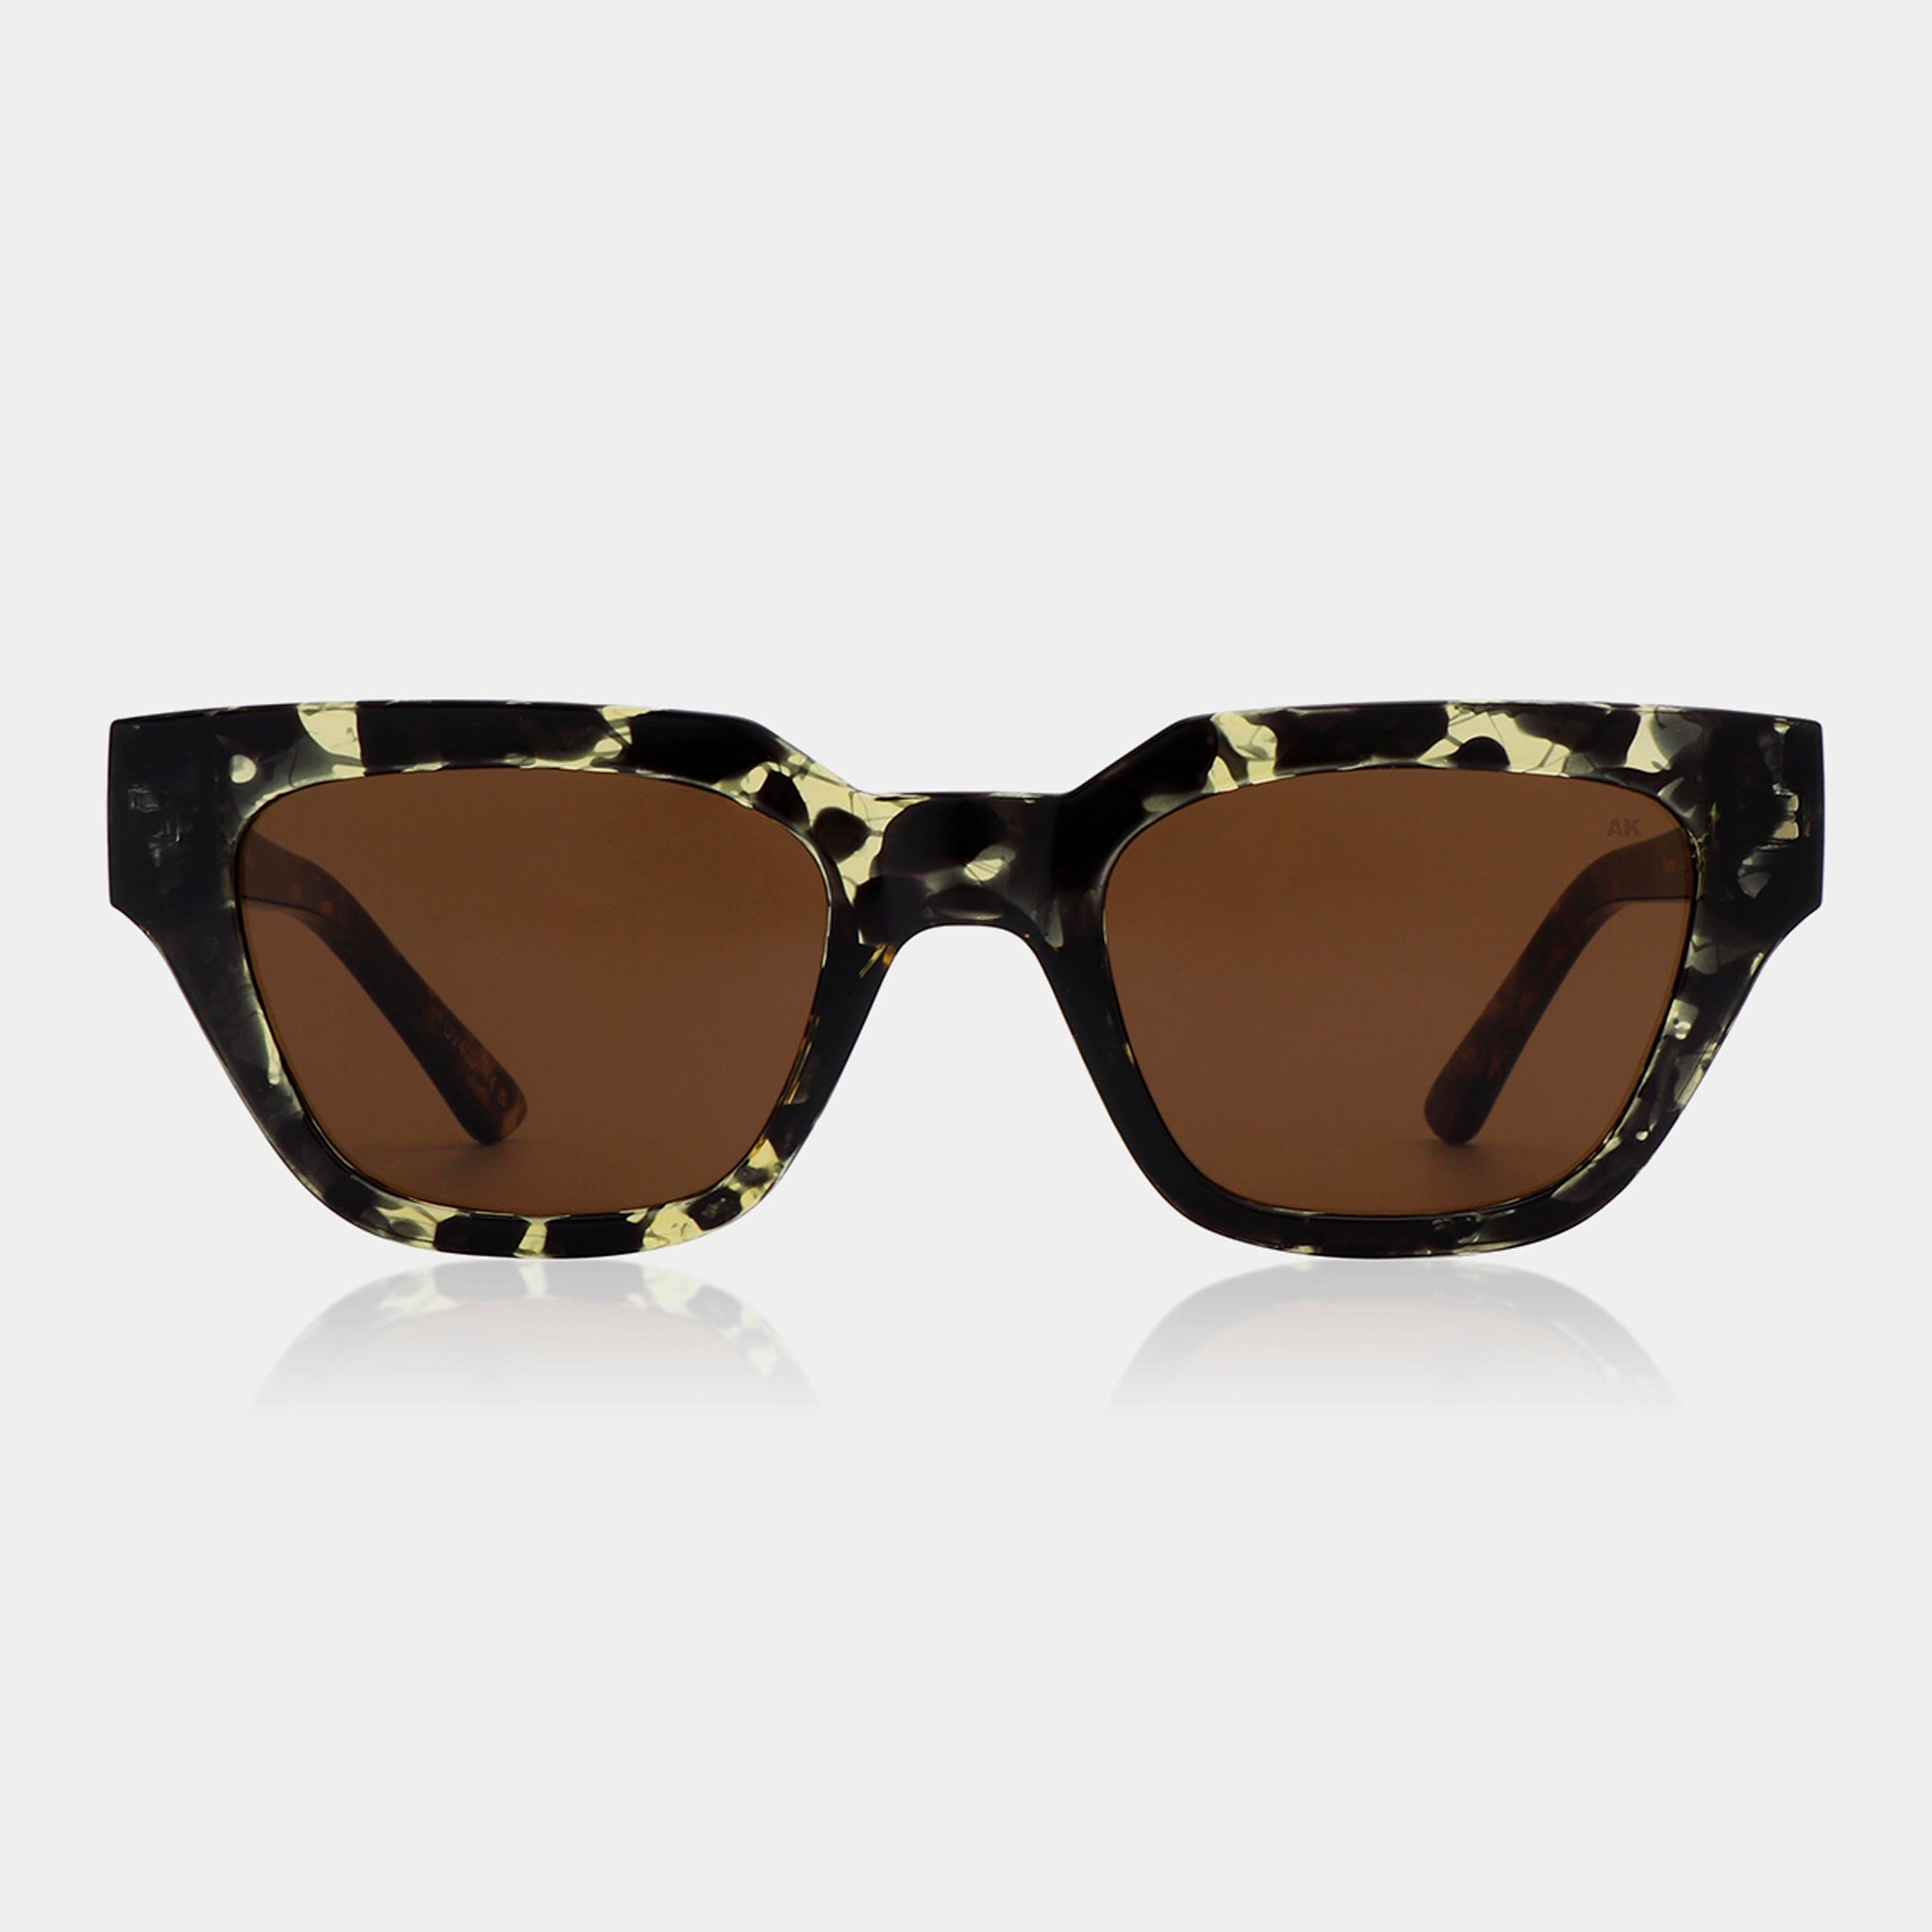 A.Kjaerbede Sunglasses - Kaws - Black / Yellow Tortoise